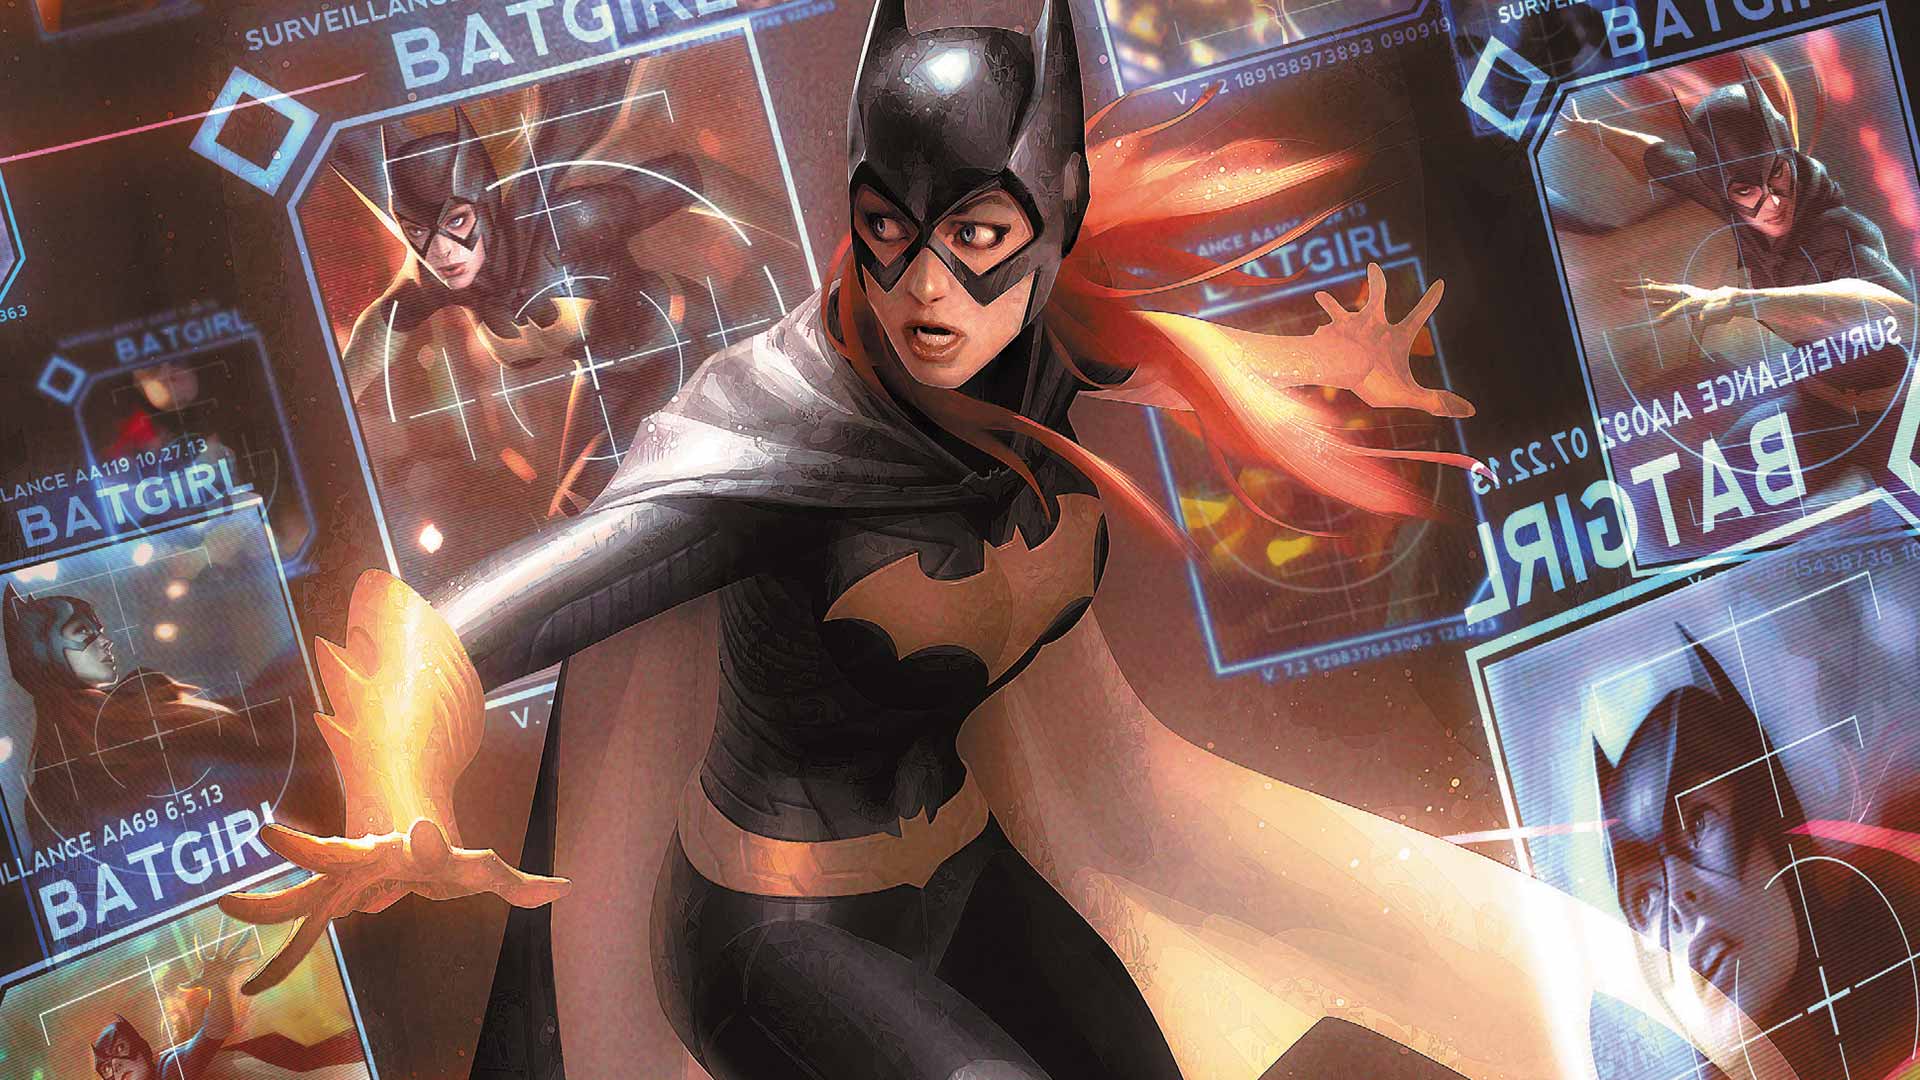 batgirl wallpaper,batman,superhero,fictional character,fiction,hero